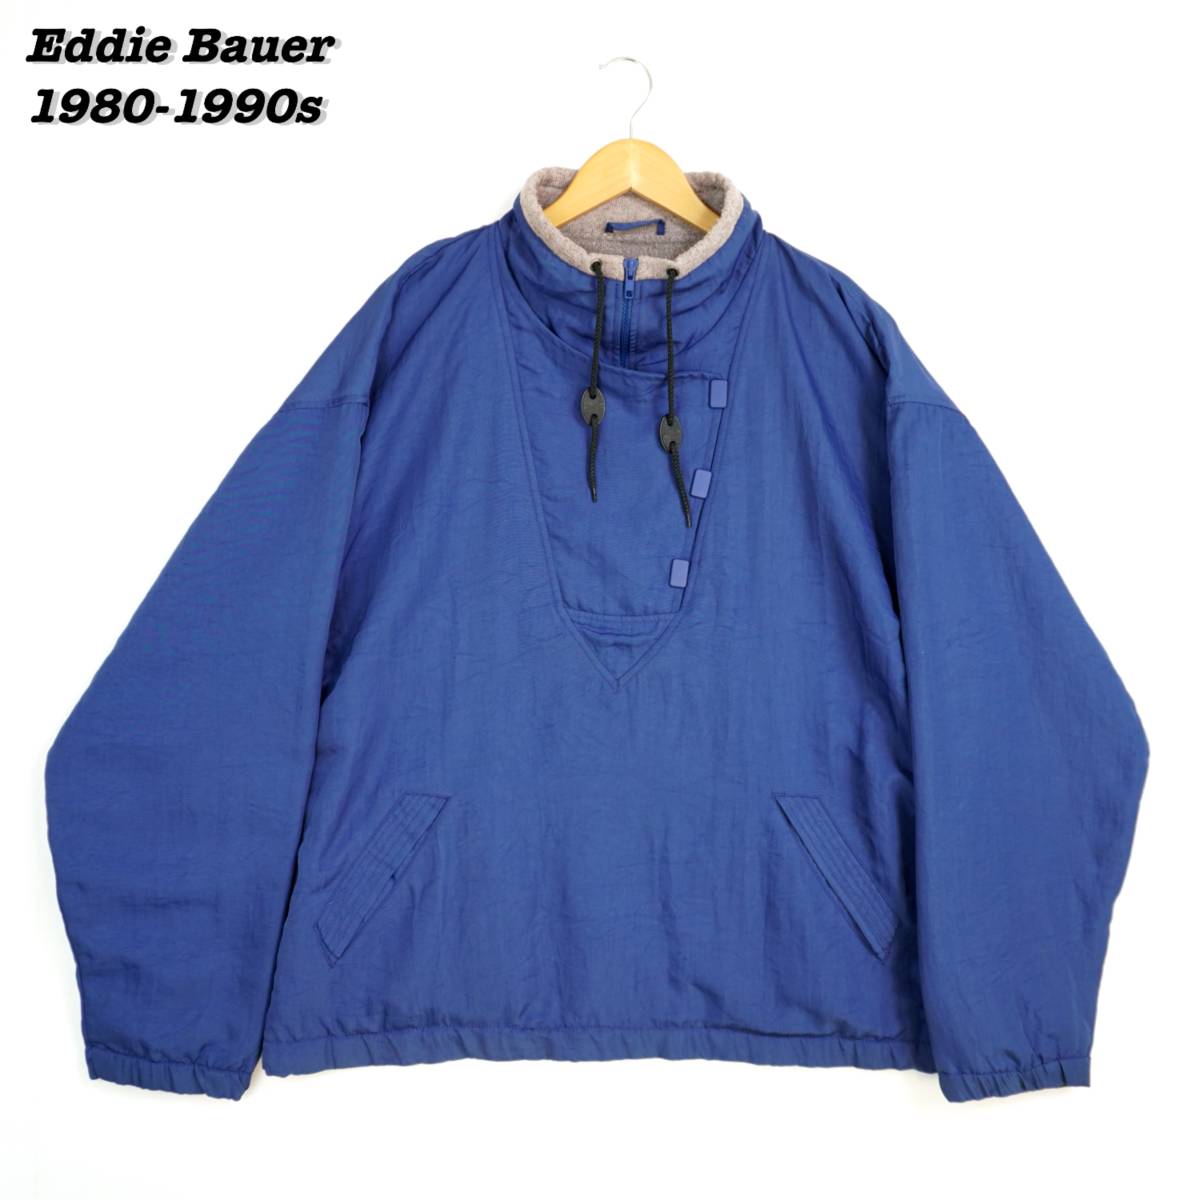 Eddie Bauer Pullover Jacket 1980s 1990s 304075 エディーバウアー プルオーバー ジャケット 防寒着 1980年代 1990年代